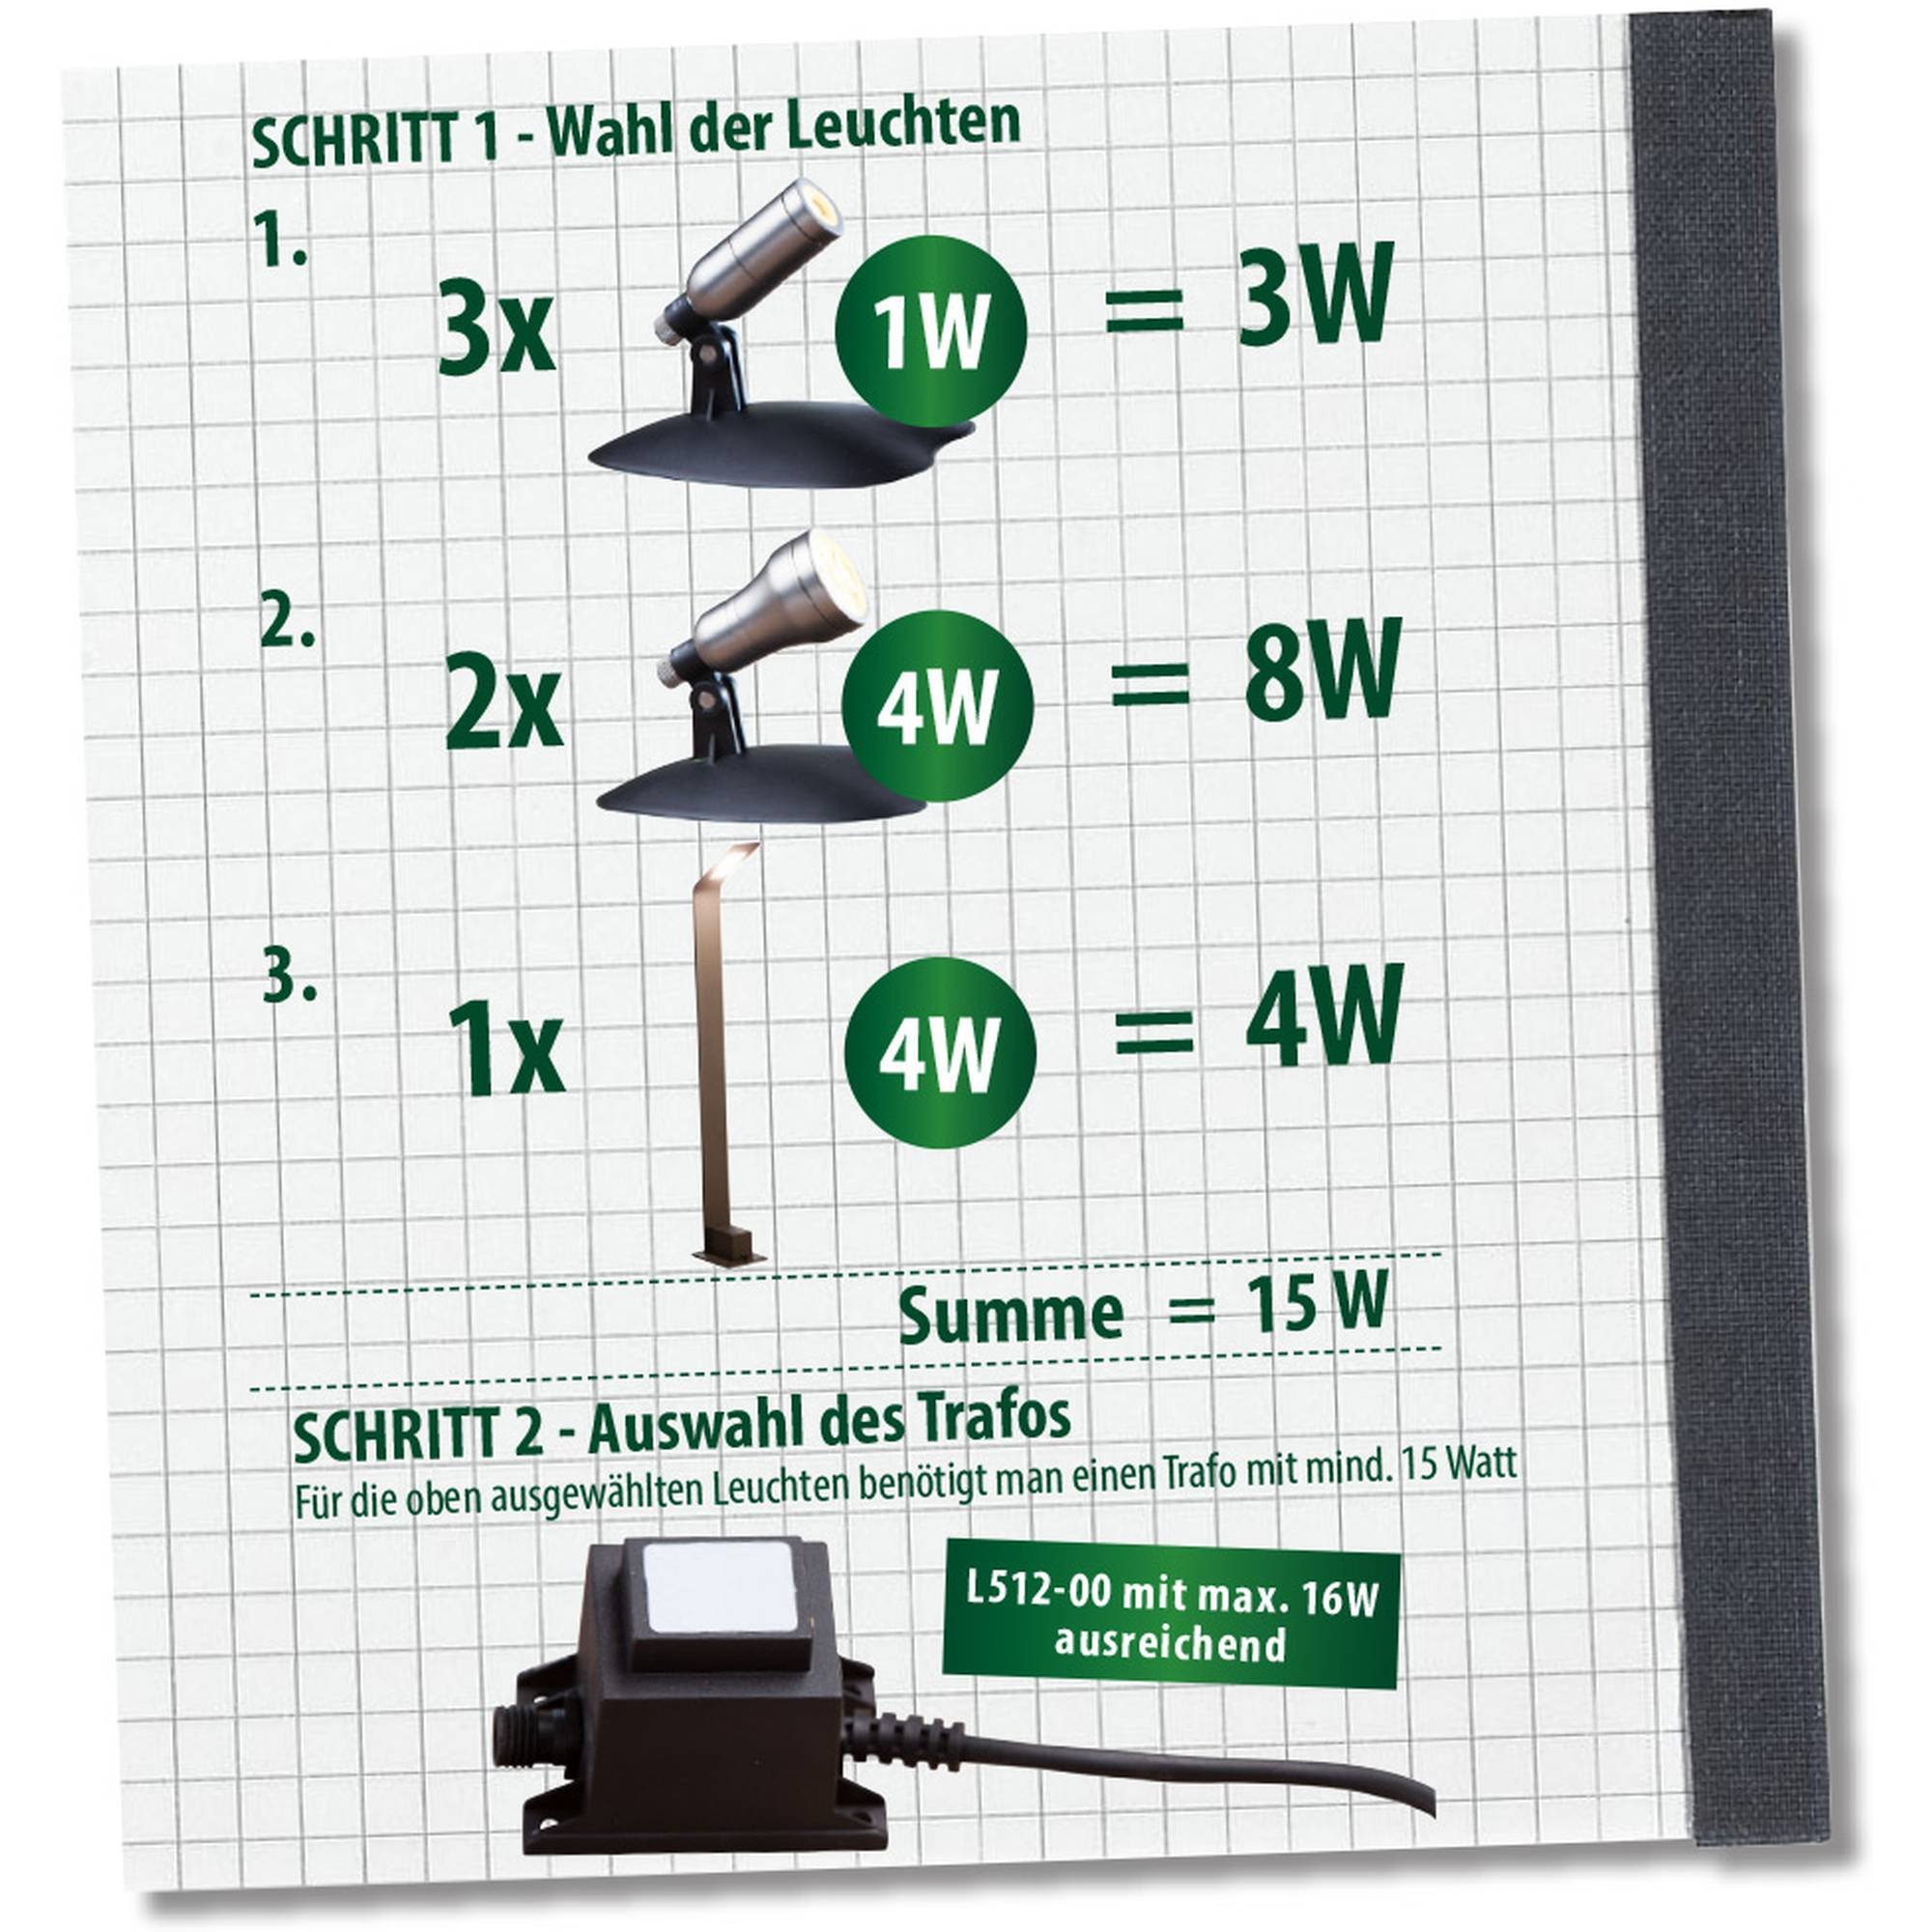 Heissner L453-00 Smart Light Bodeneinbau Spot und Decklight 3 Watt silber